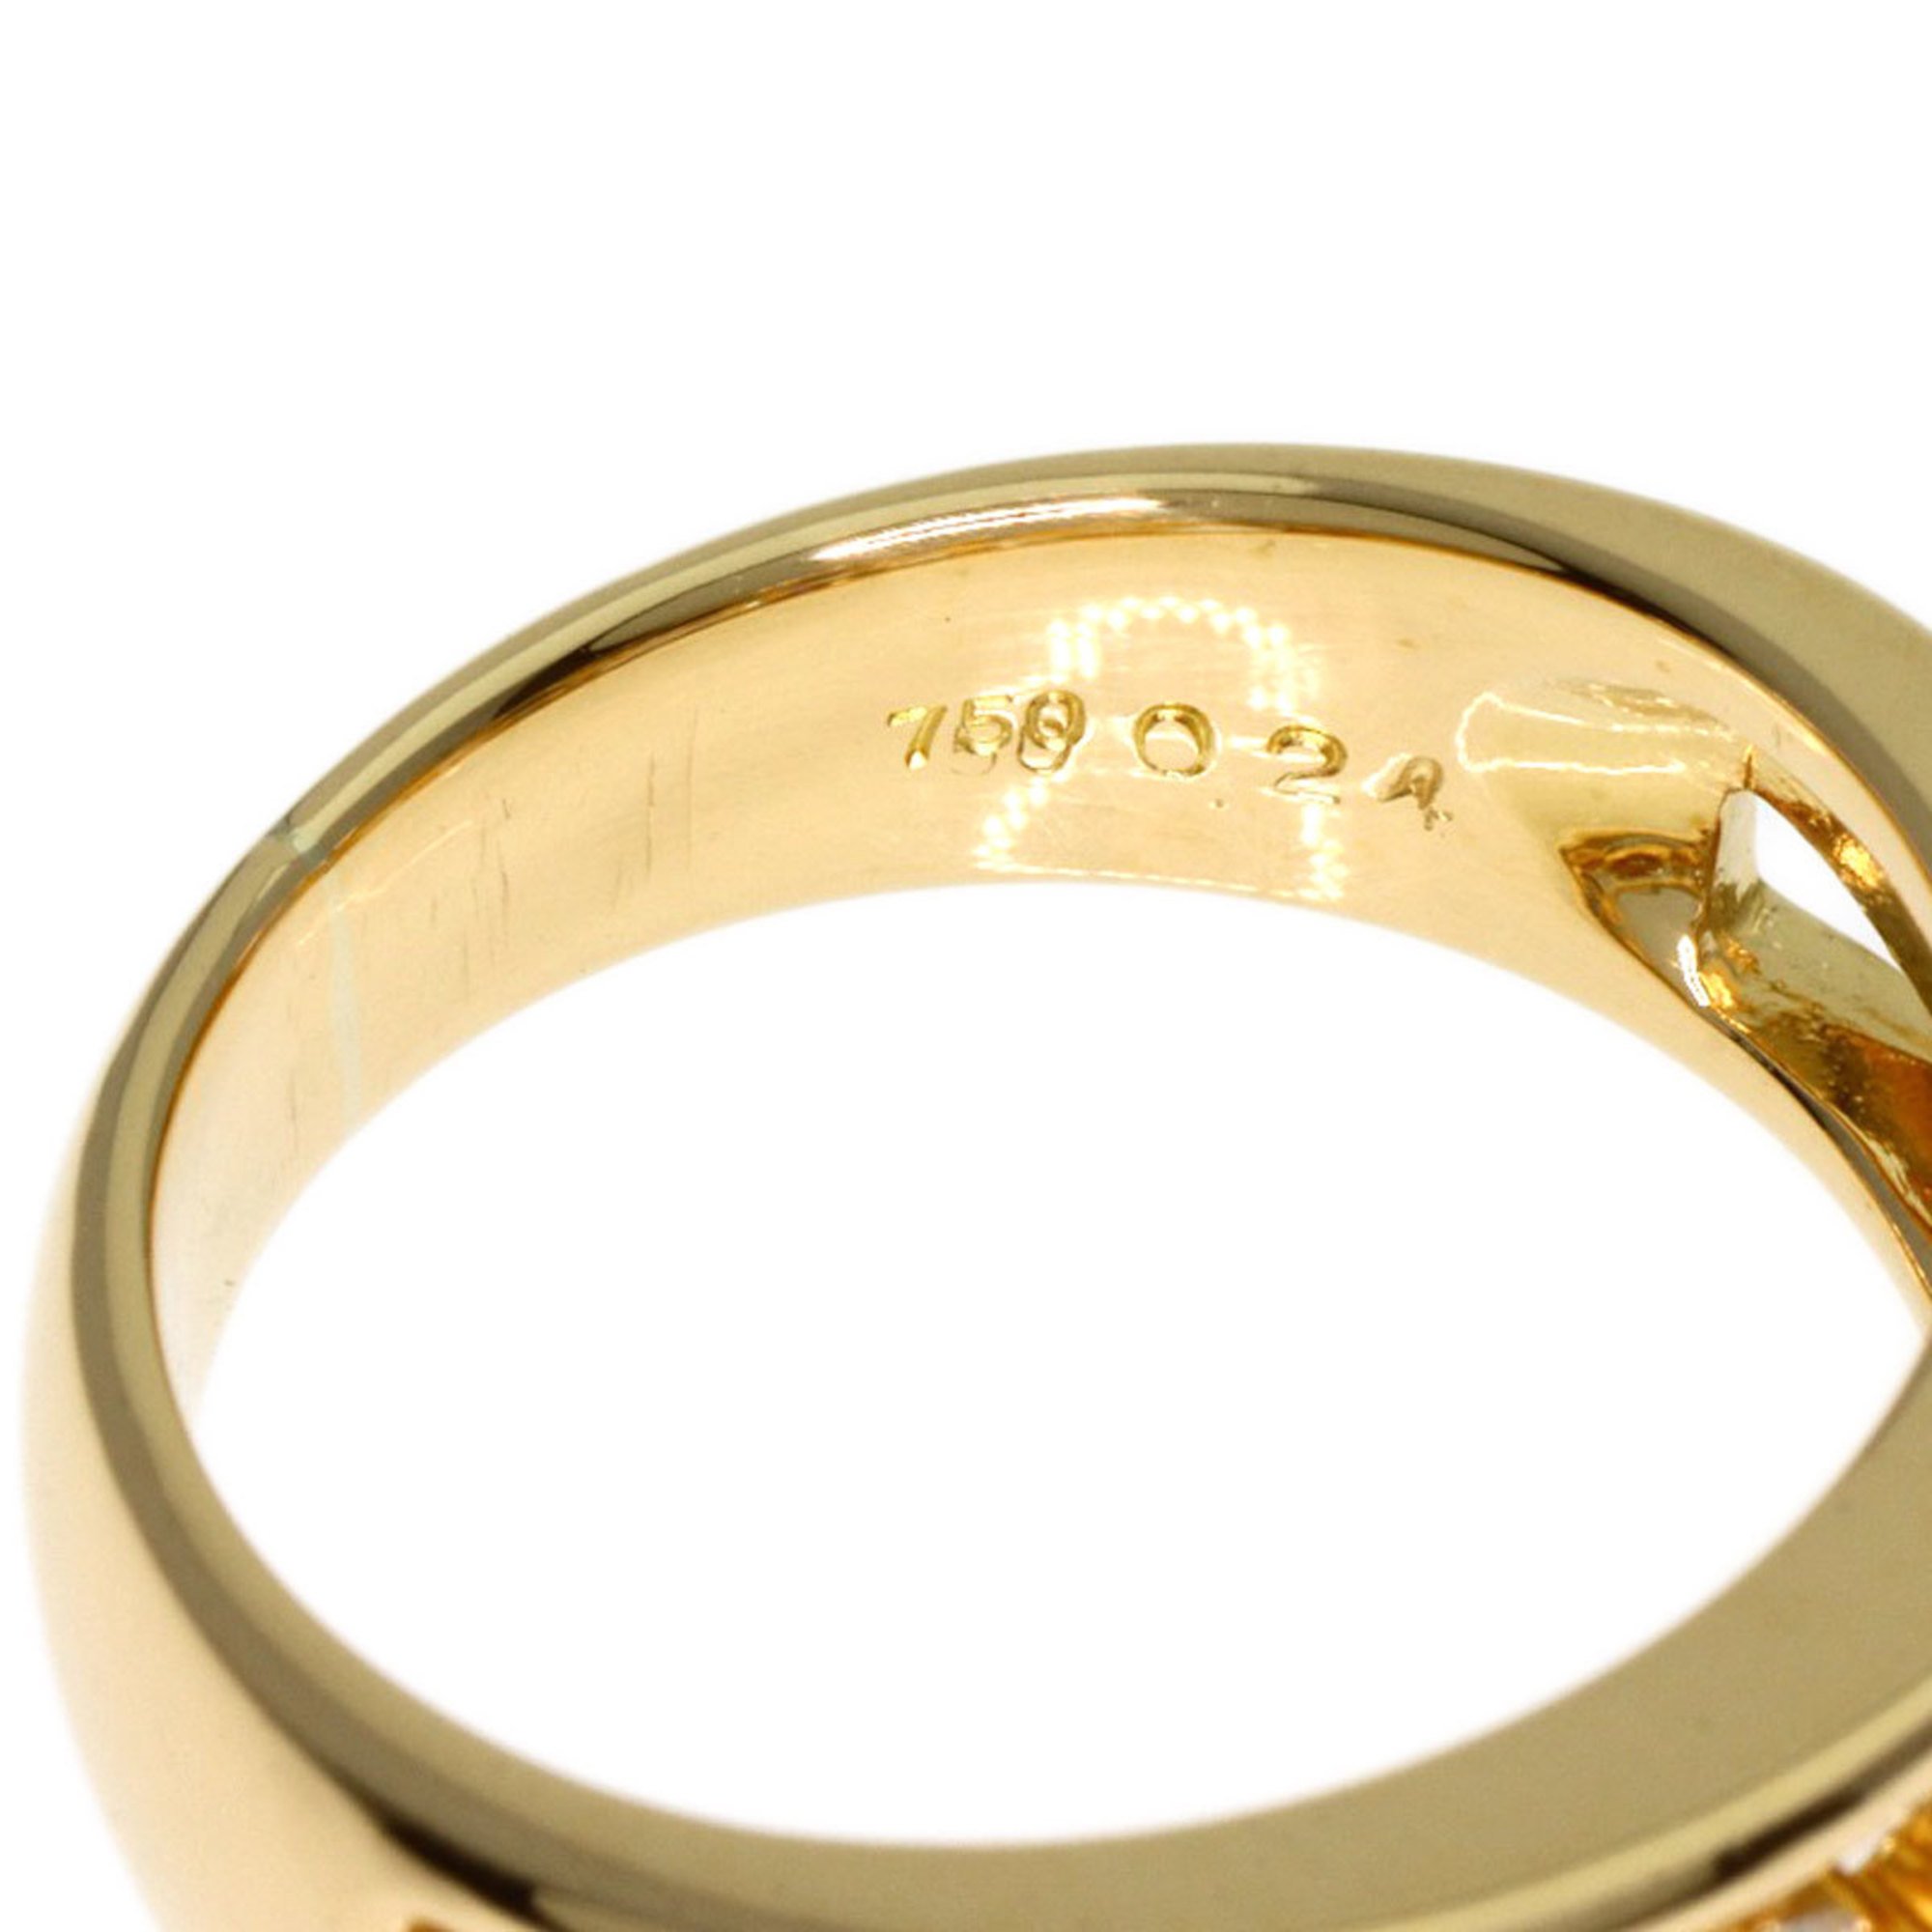 Celine Diamond Ring, 18K Yellow Gold, Women's